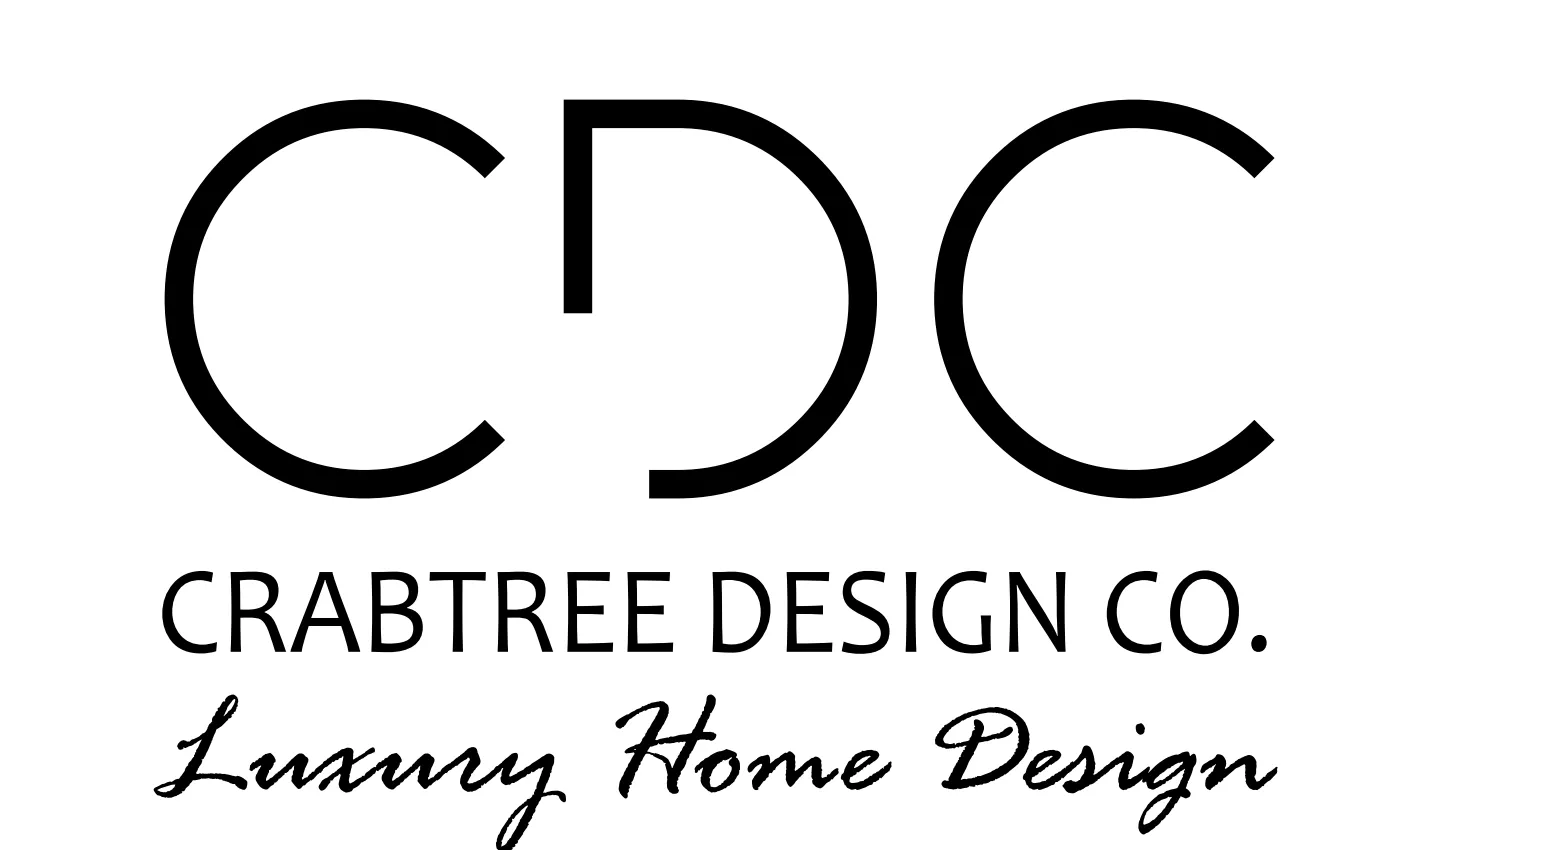 CDC sponsor